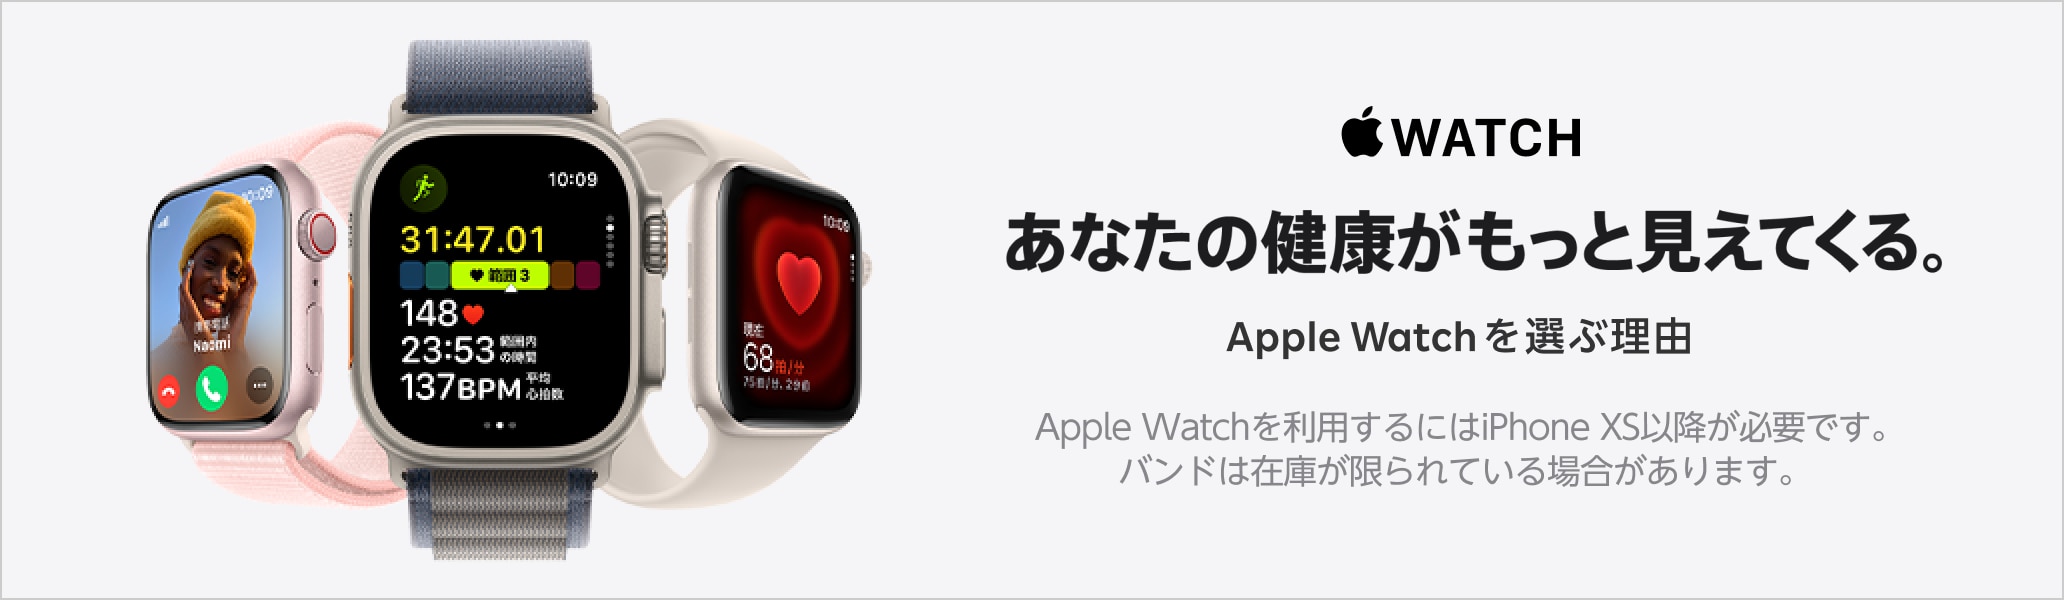 Apple Watchを選ぶ理由